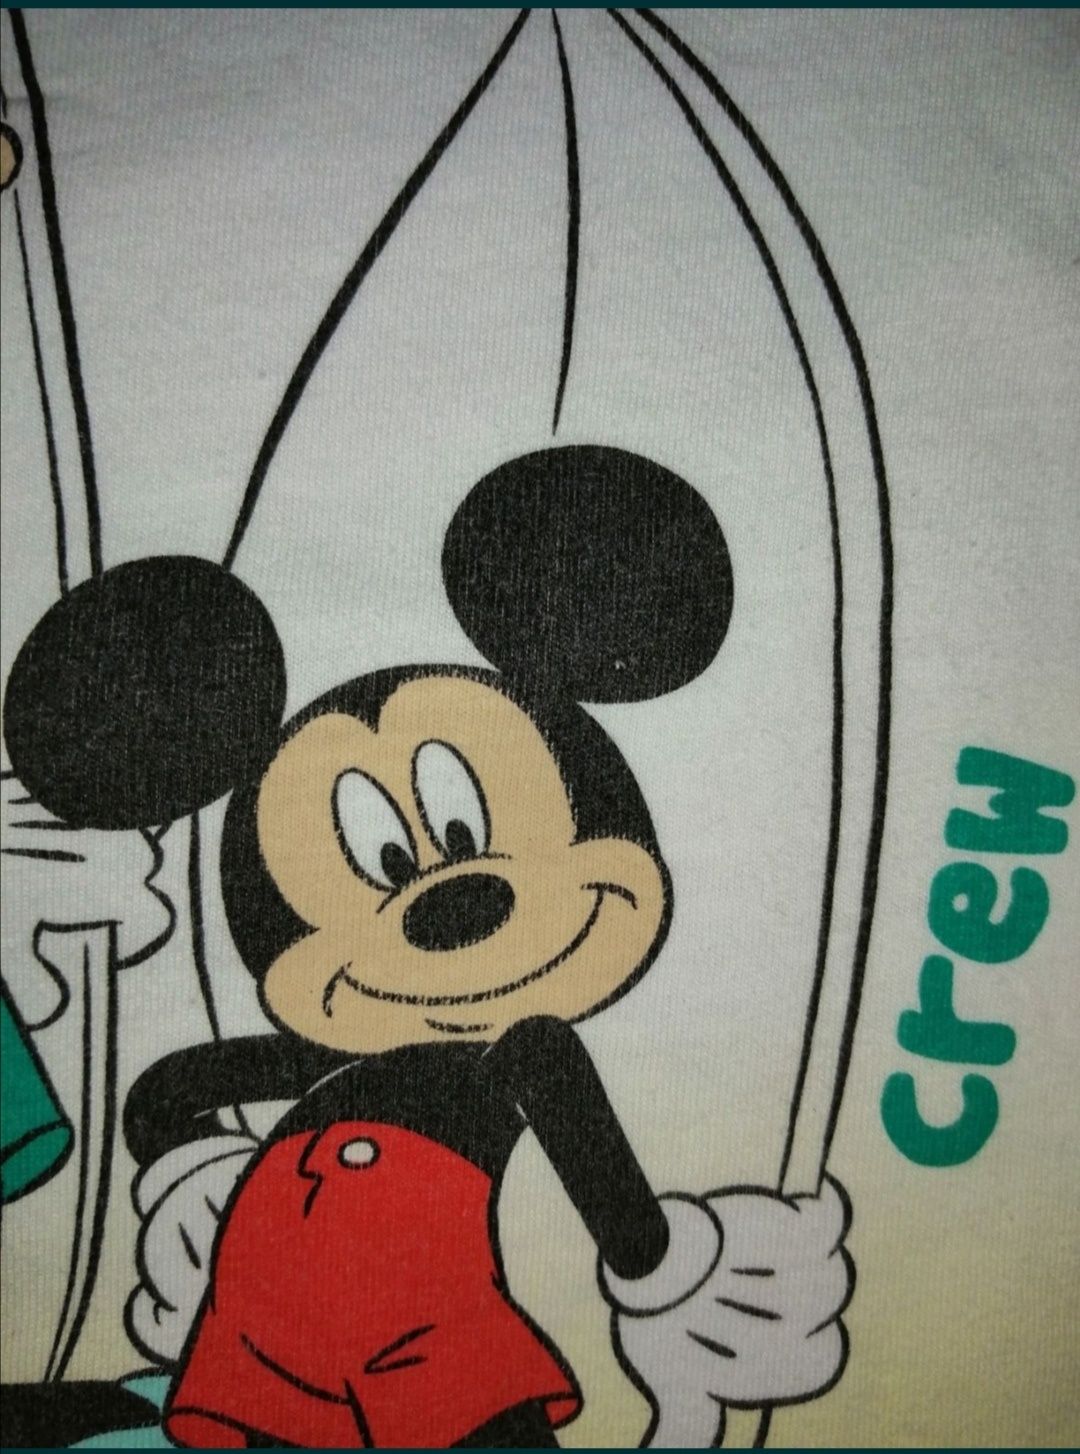 Komplecik Disney Mickey Mouse